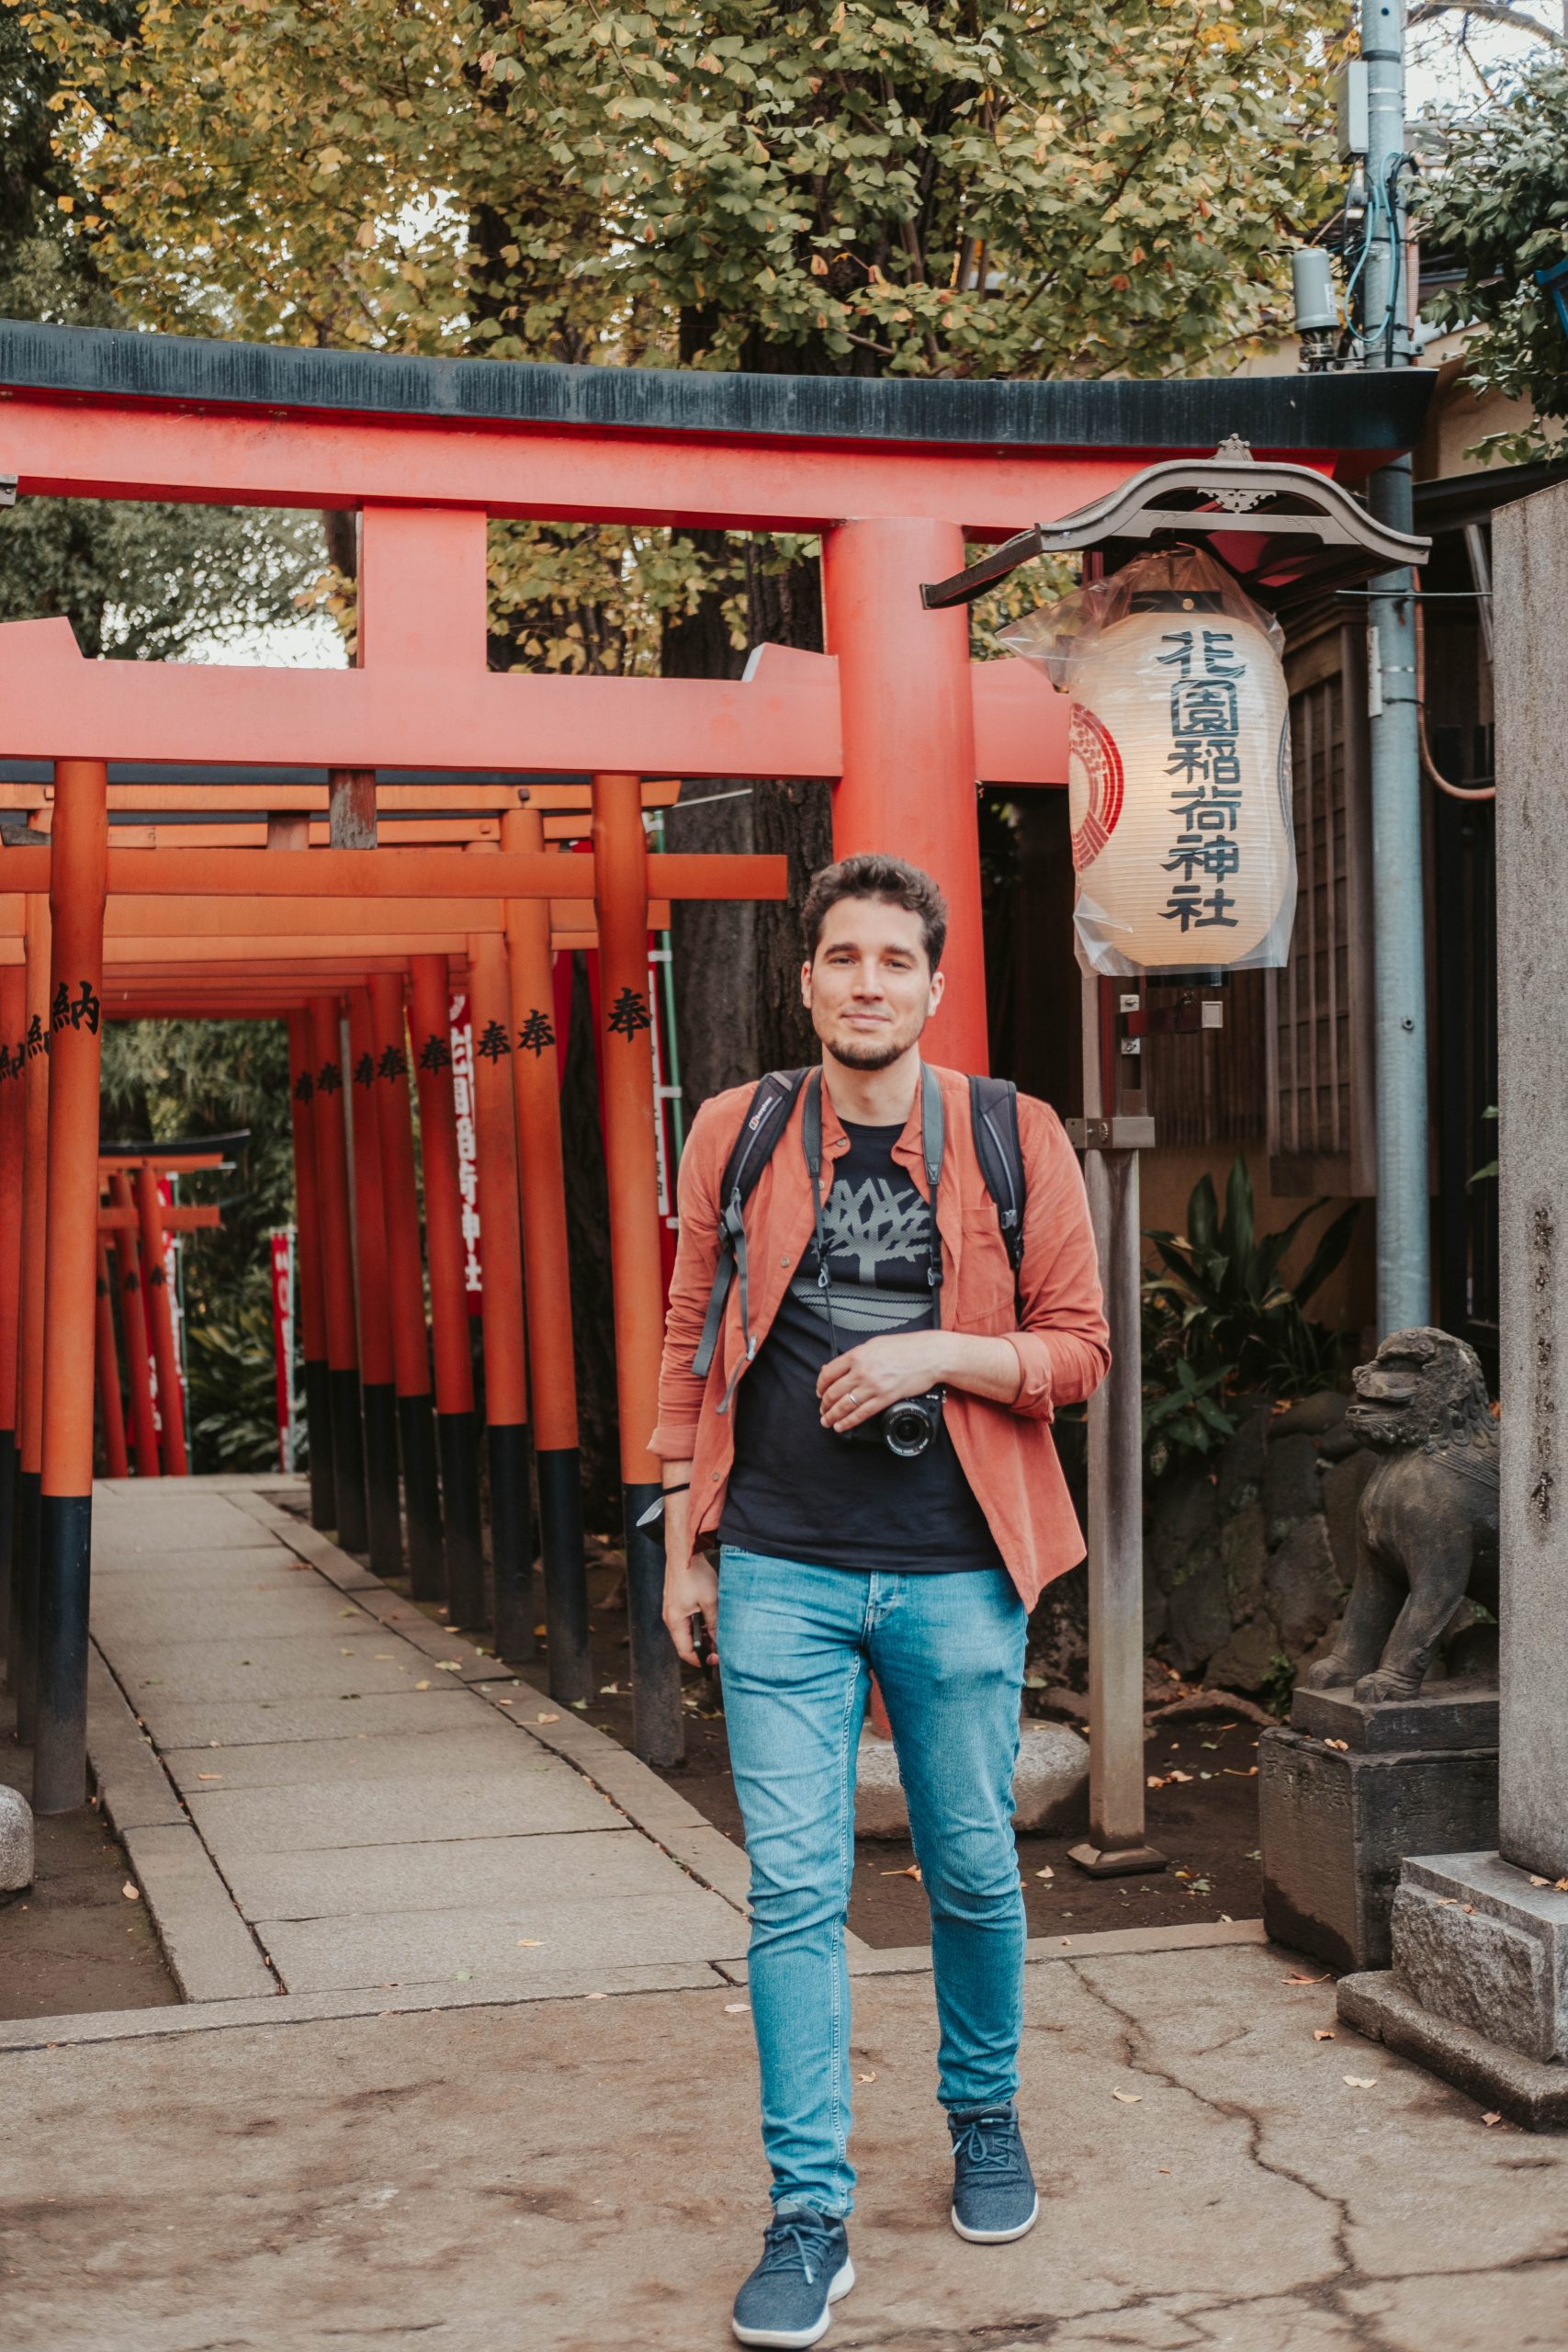 Greg at the Hanazono Inari Shrine with red torii gates